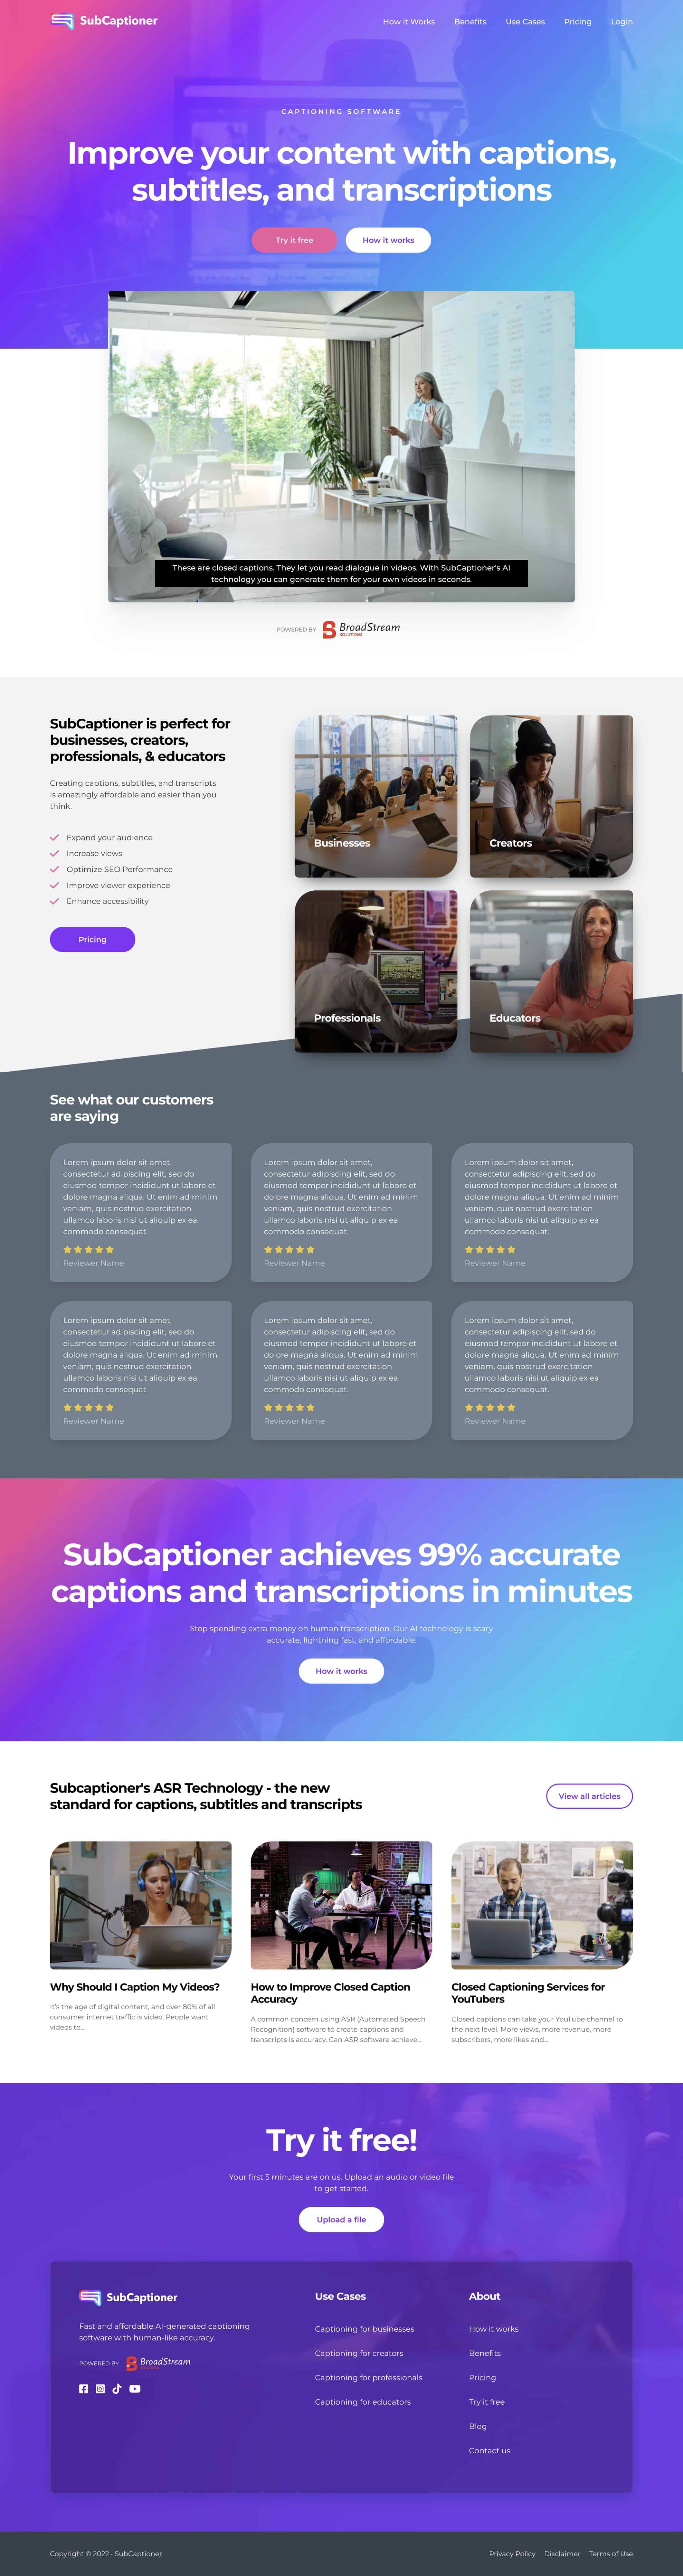 SubCaptioner home page web design